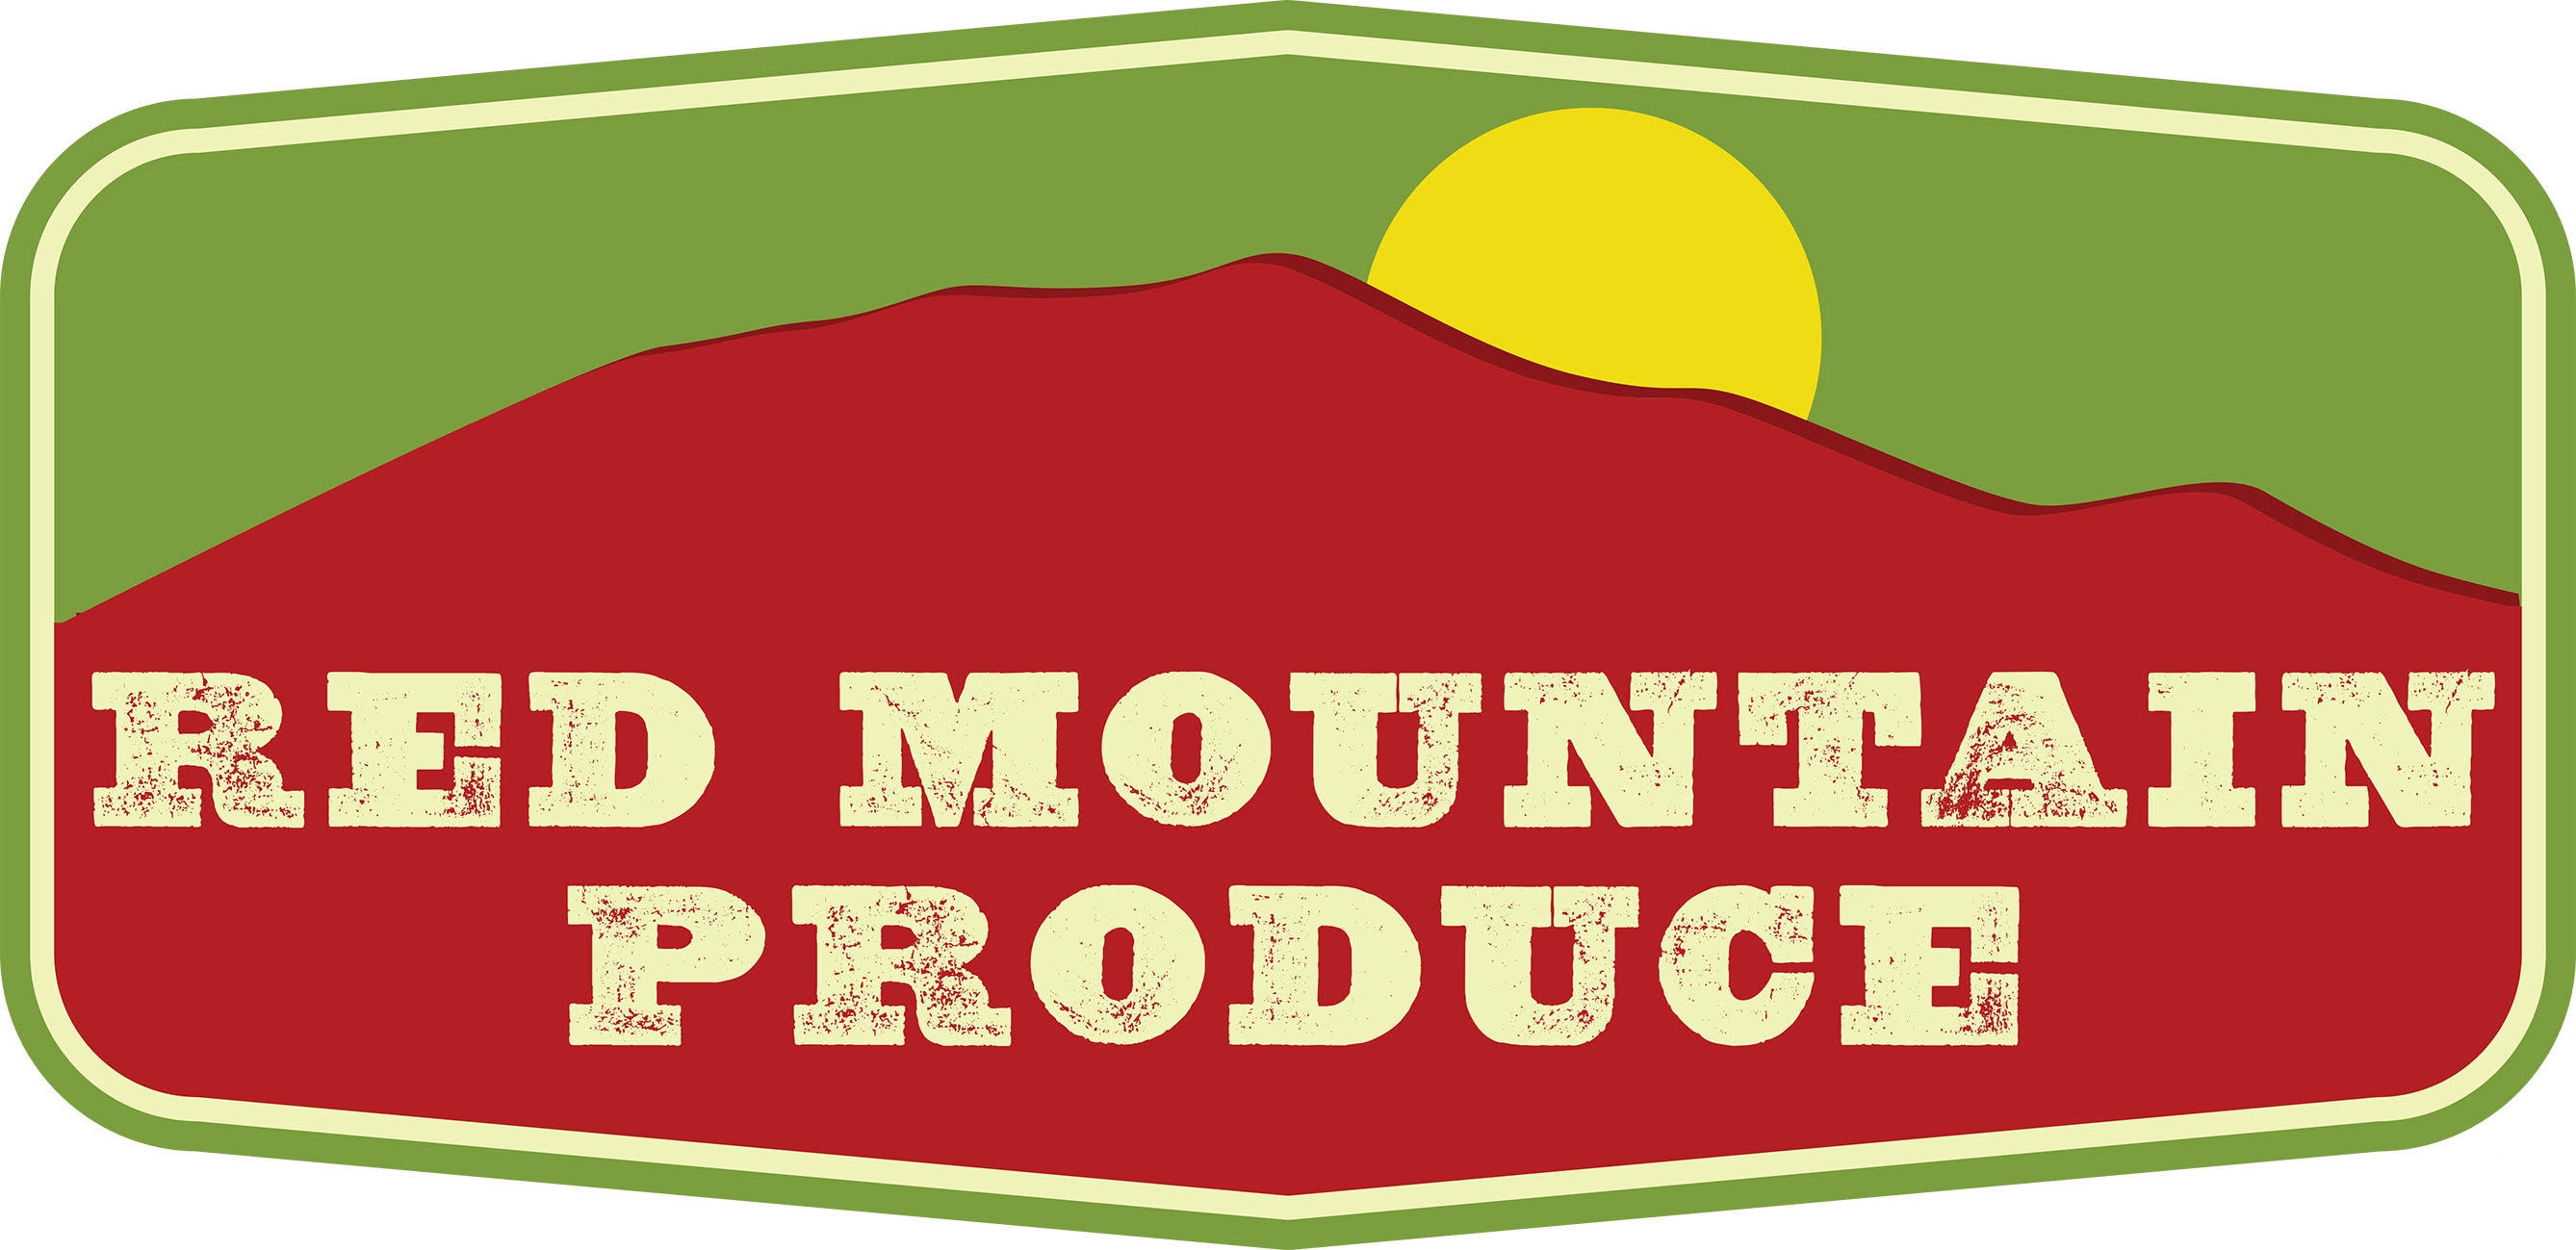 Red Mountain Produce Logo